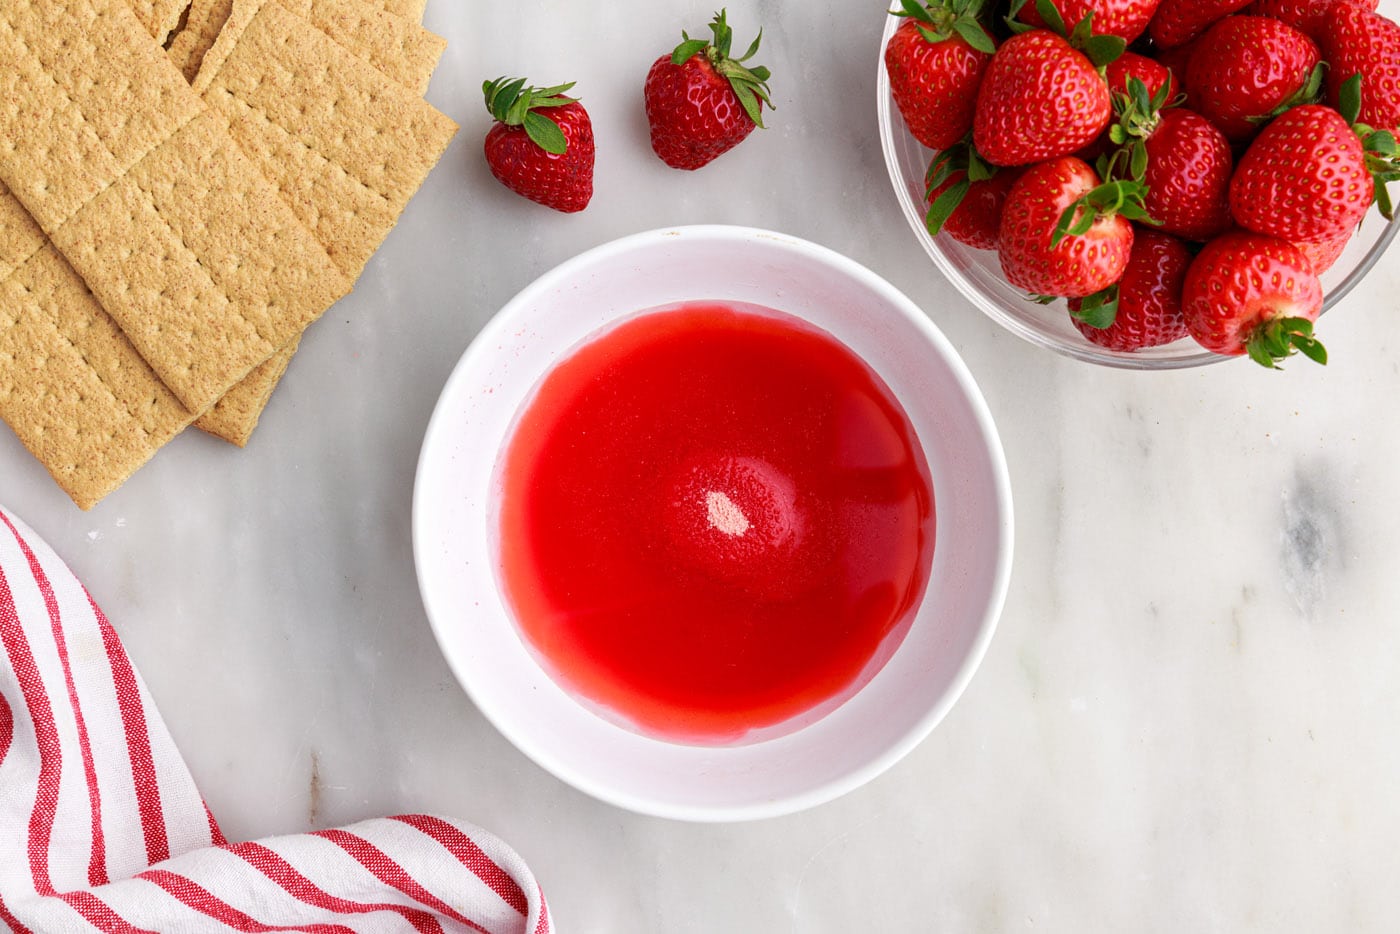 strawberry gelatin in a bowl